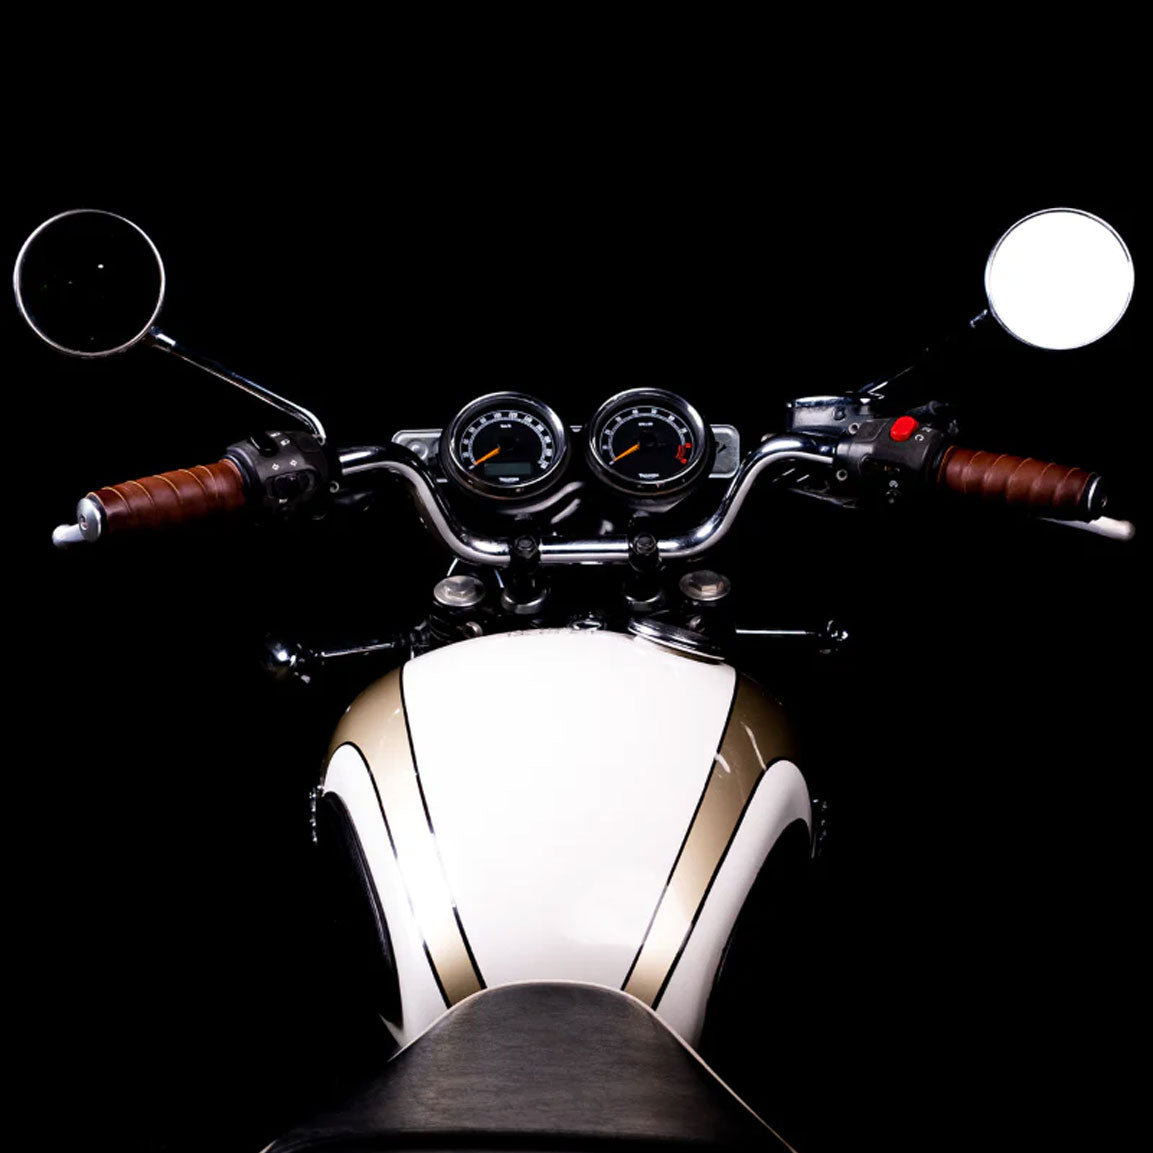 Trip Machine Grips Wrap Motorrad-Griffband aus Leder - Cognac